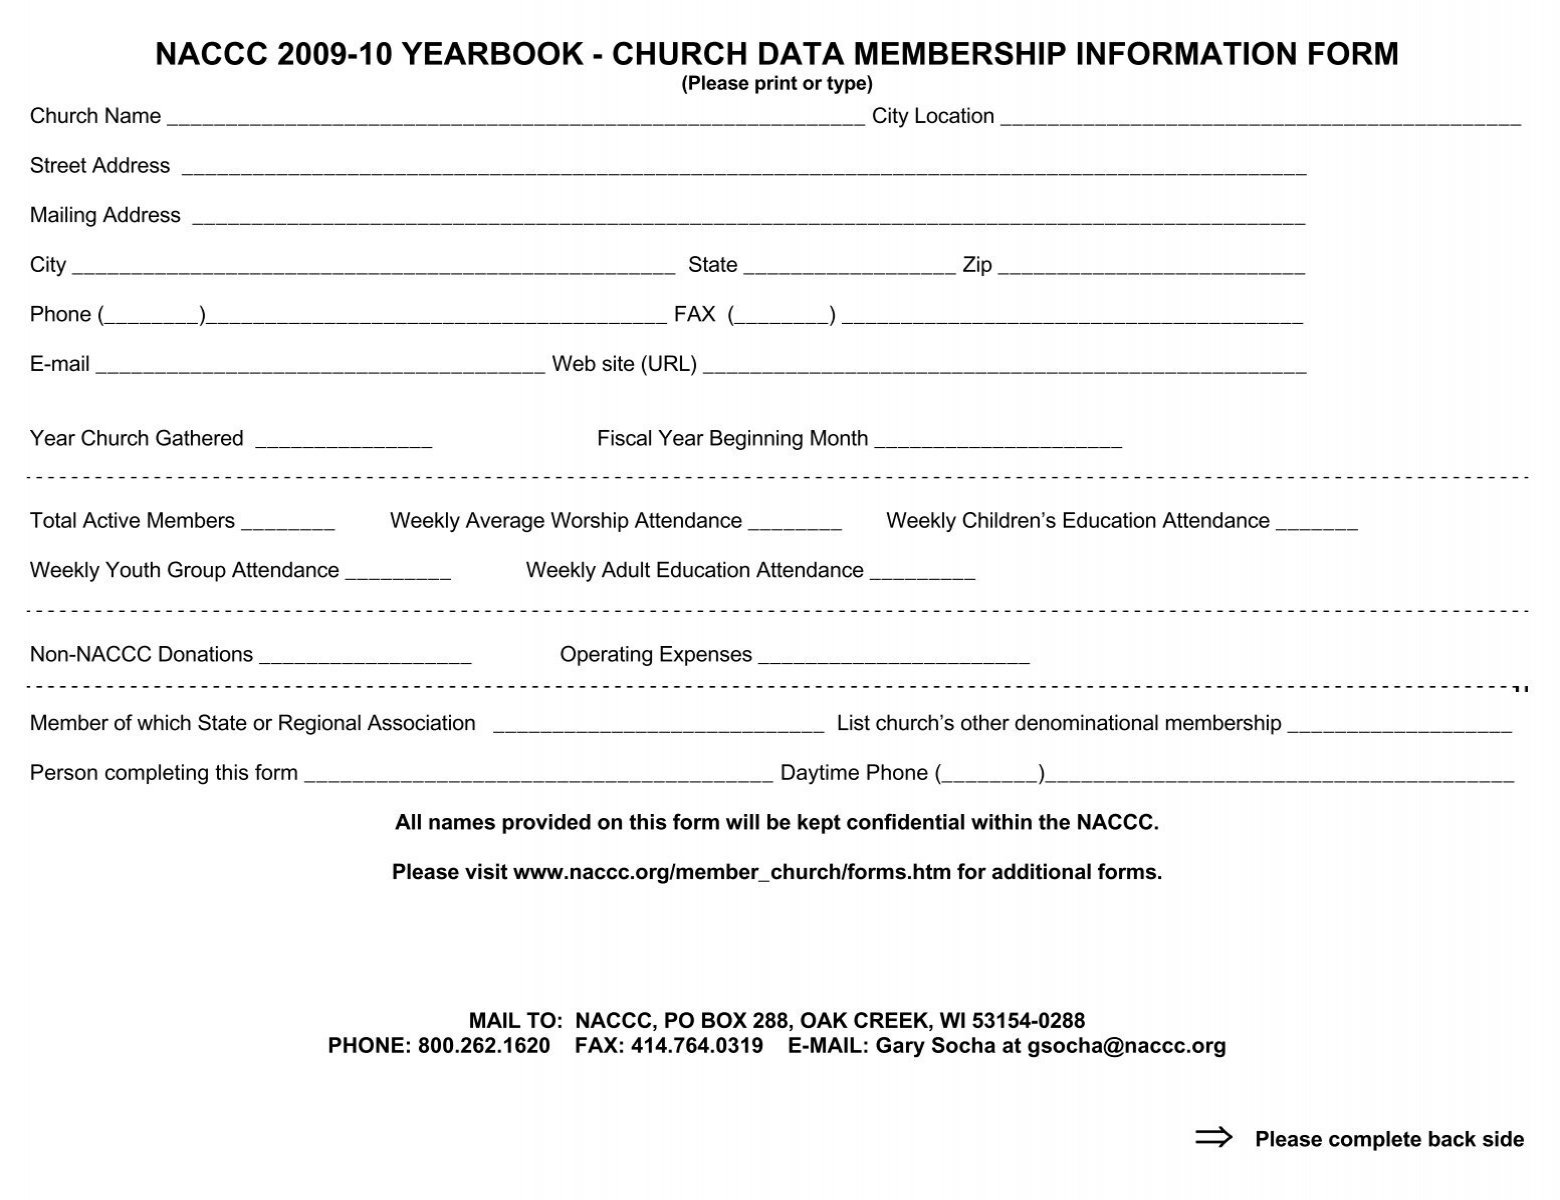 Church member information form